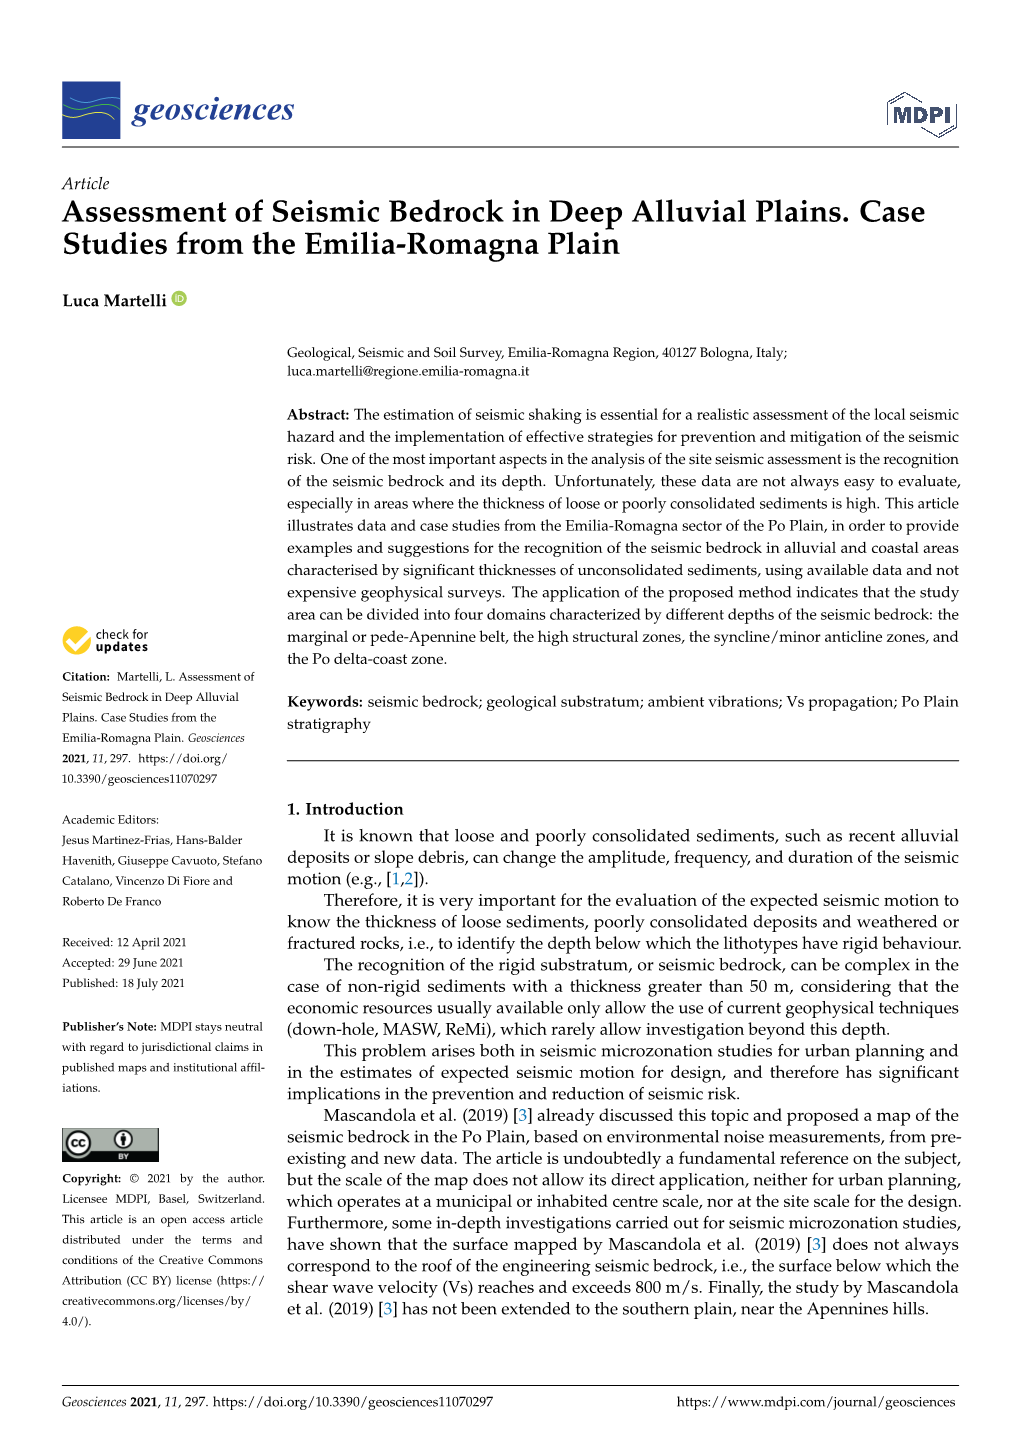 Assessment of Seismic Bedrock in Deep Alluvial Plains. Case Studies from the Emilia-Romagna Plain